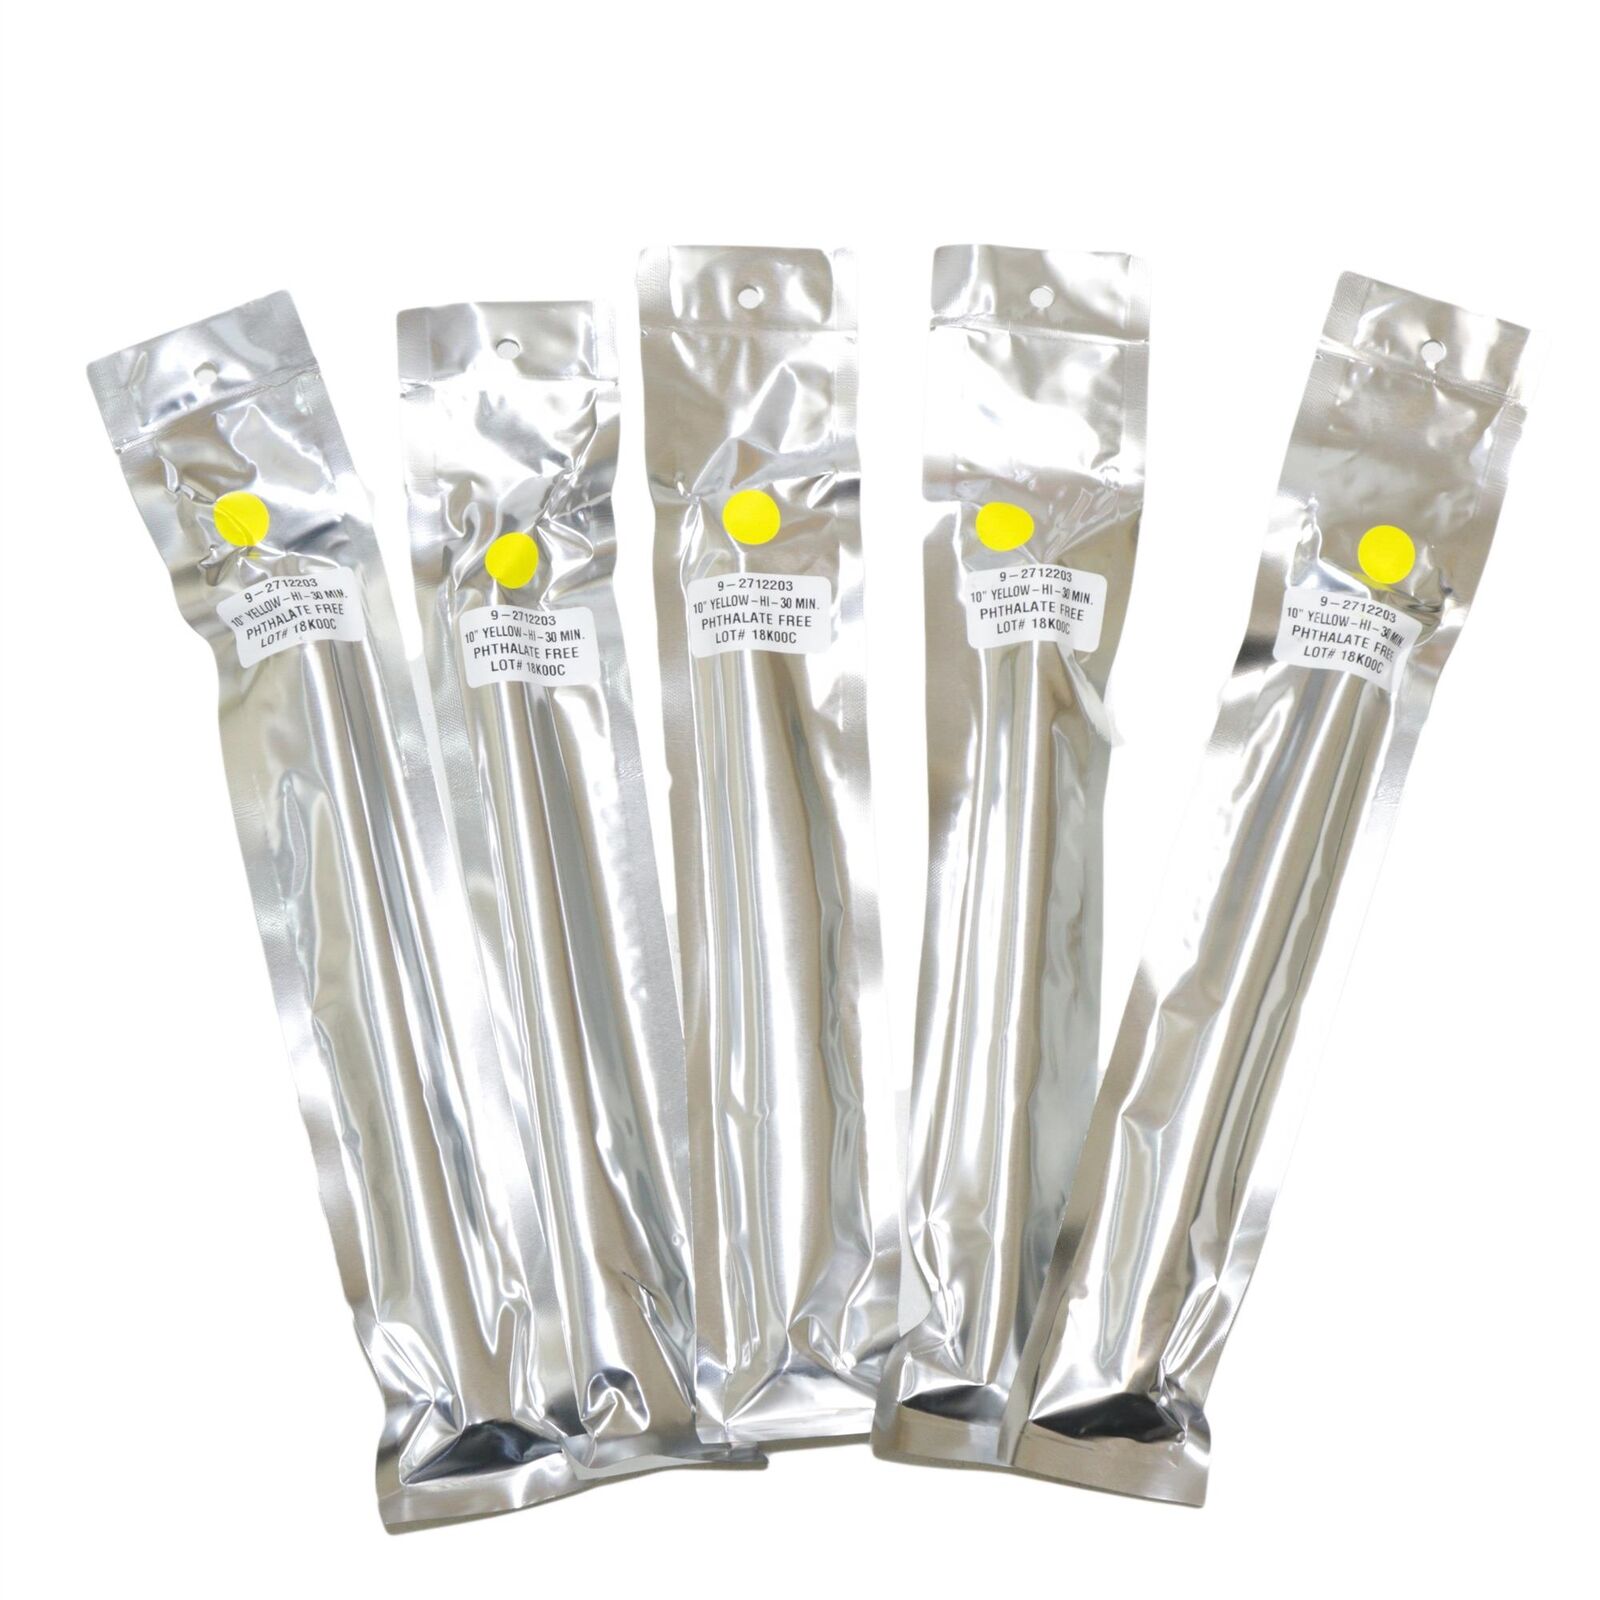 Genuine British Army Cyalume Chemlight Sticks Yellow Large 10